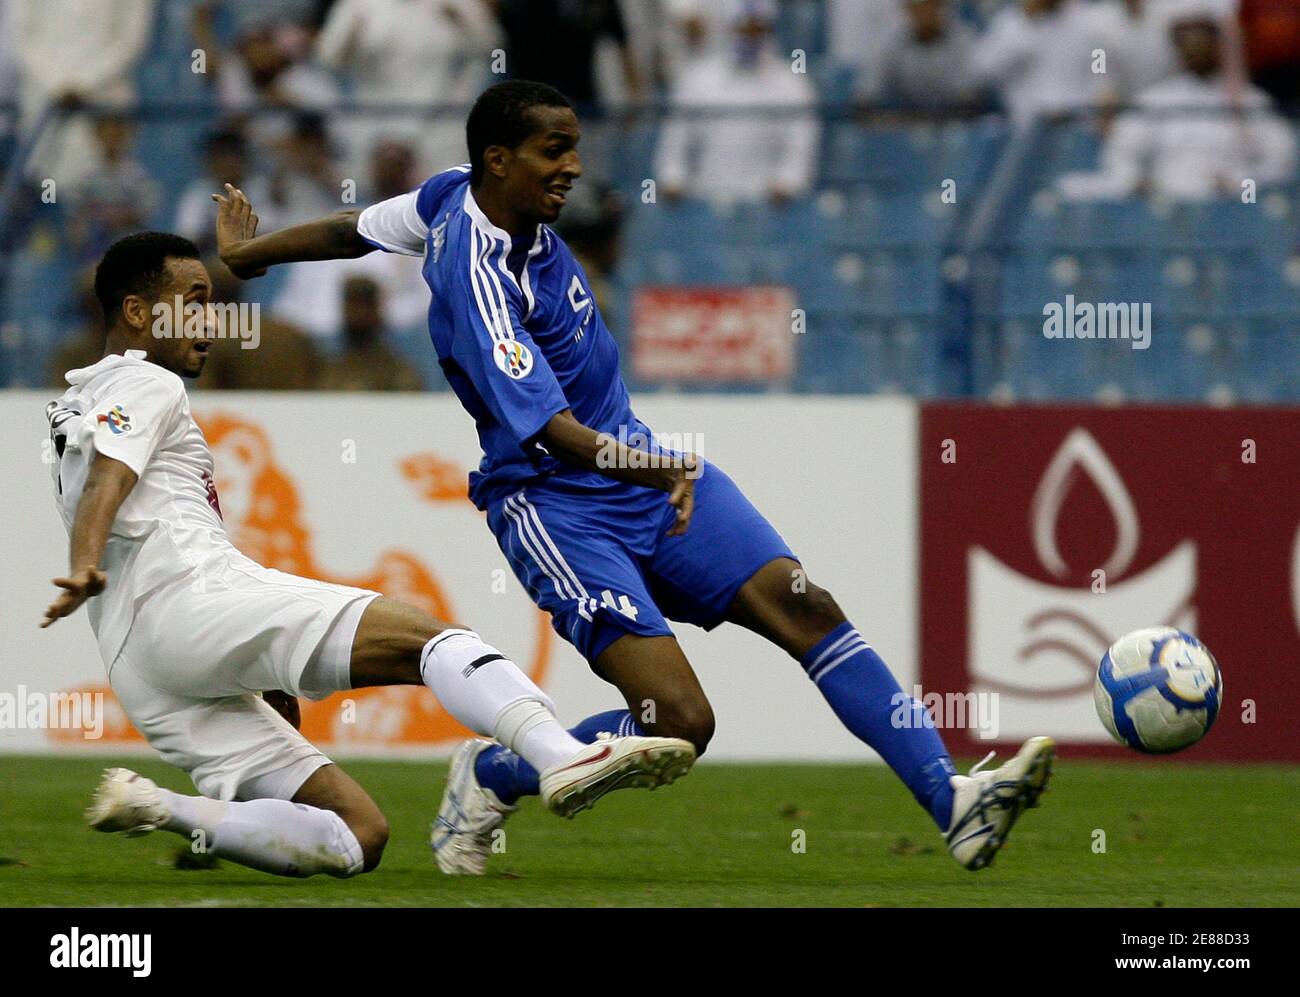 Saudi Al-Hilal's Abdullah Alzori (R) fights for the ball with Qatar's Al Sadd Majed Mohammed during their AFC Champions League match at King Fahad stadium in Riyadh April 13, 2010.   REUTERS/Fahad Shadeed  (SAUDI ARABIA - Tags: SPORT SOCCER) Stock Photo